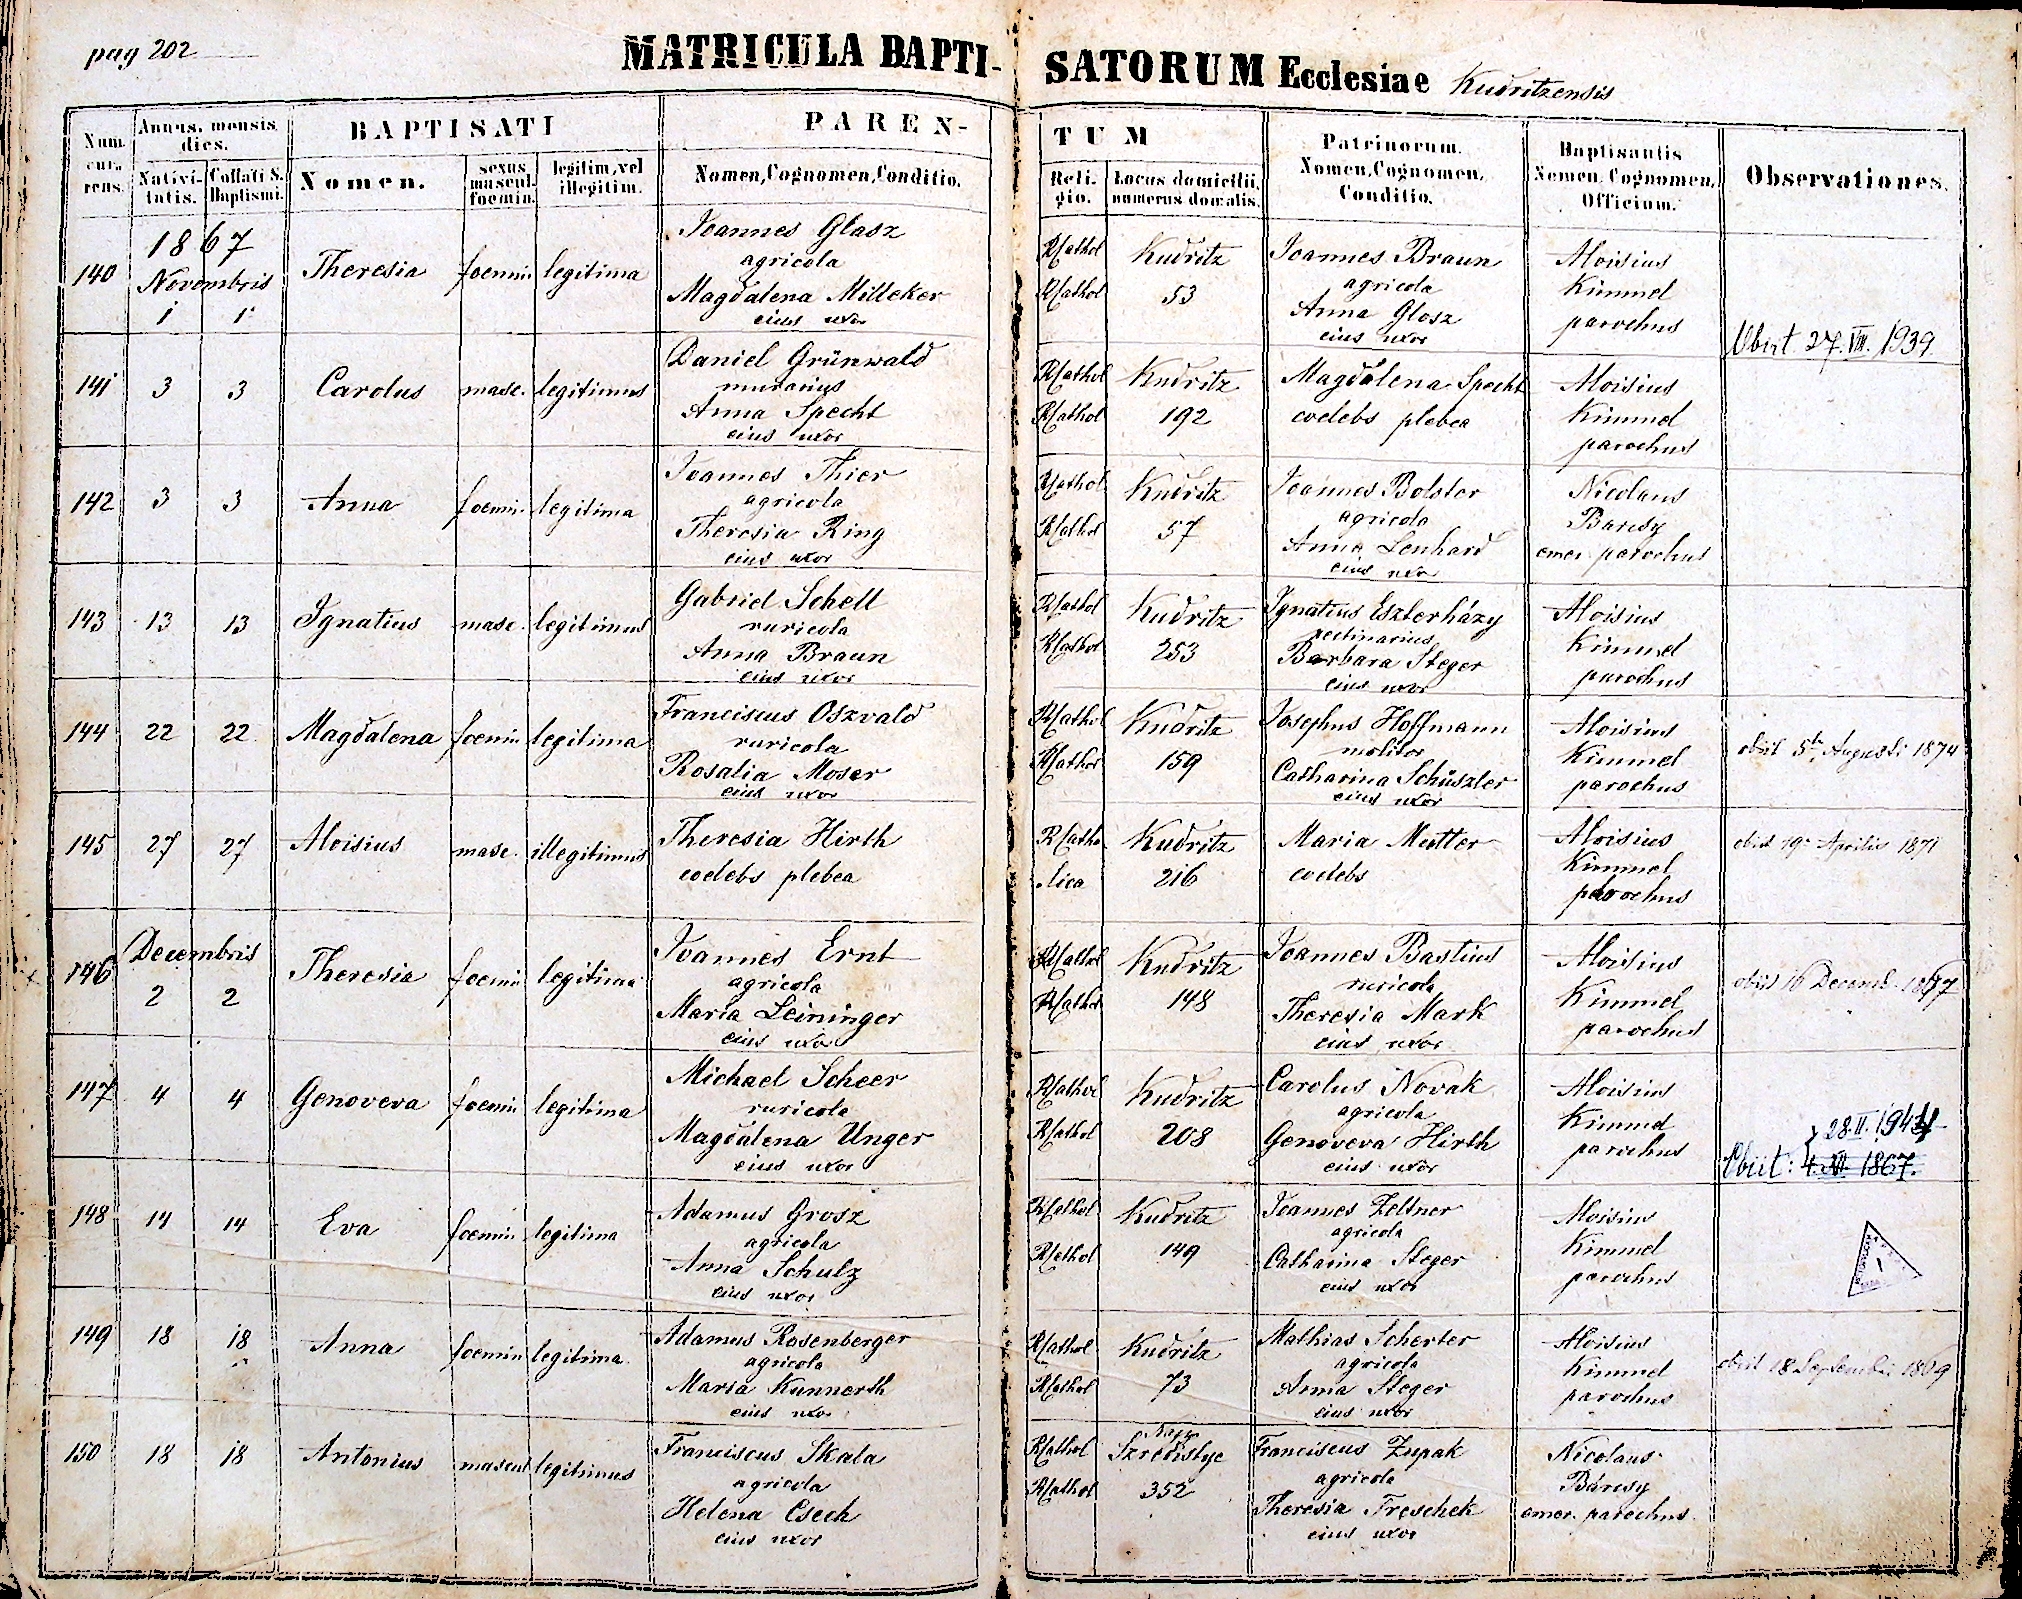 images/church_records/BIRTHS/1852-1870B/202